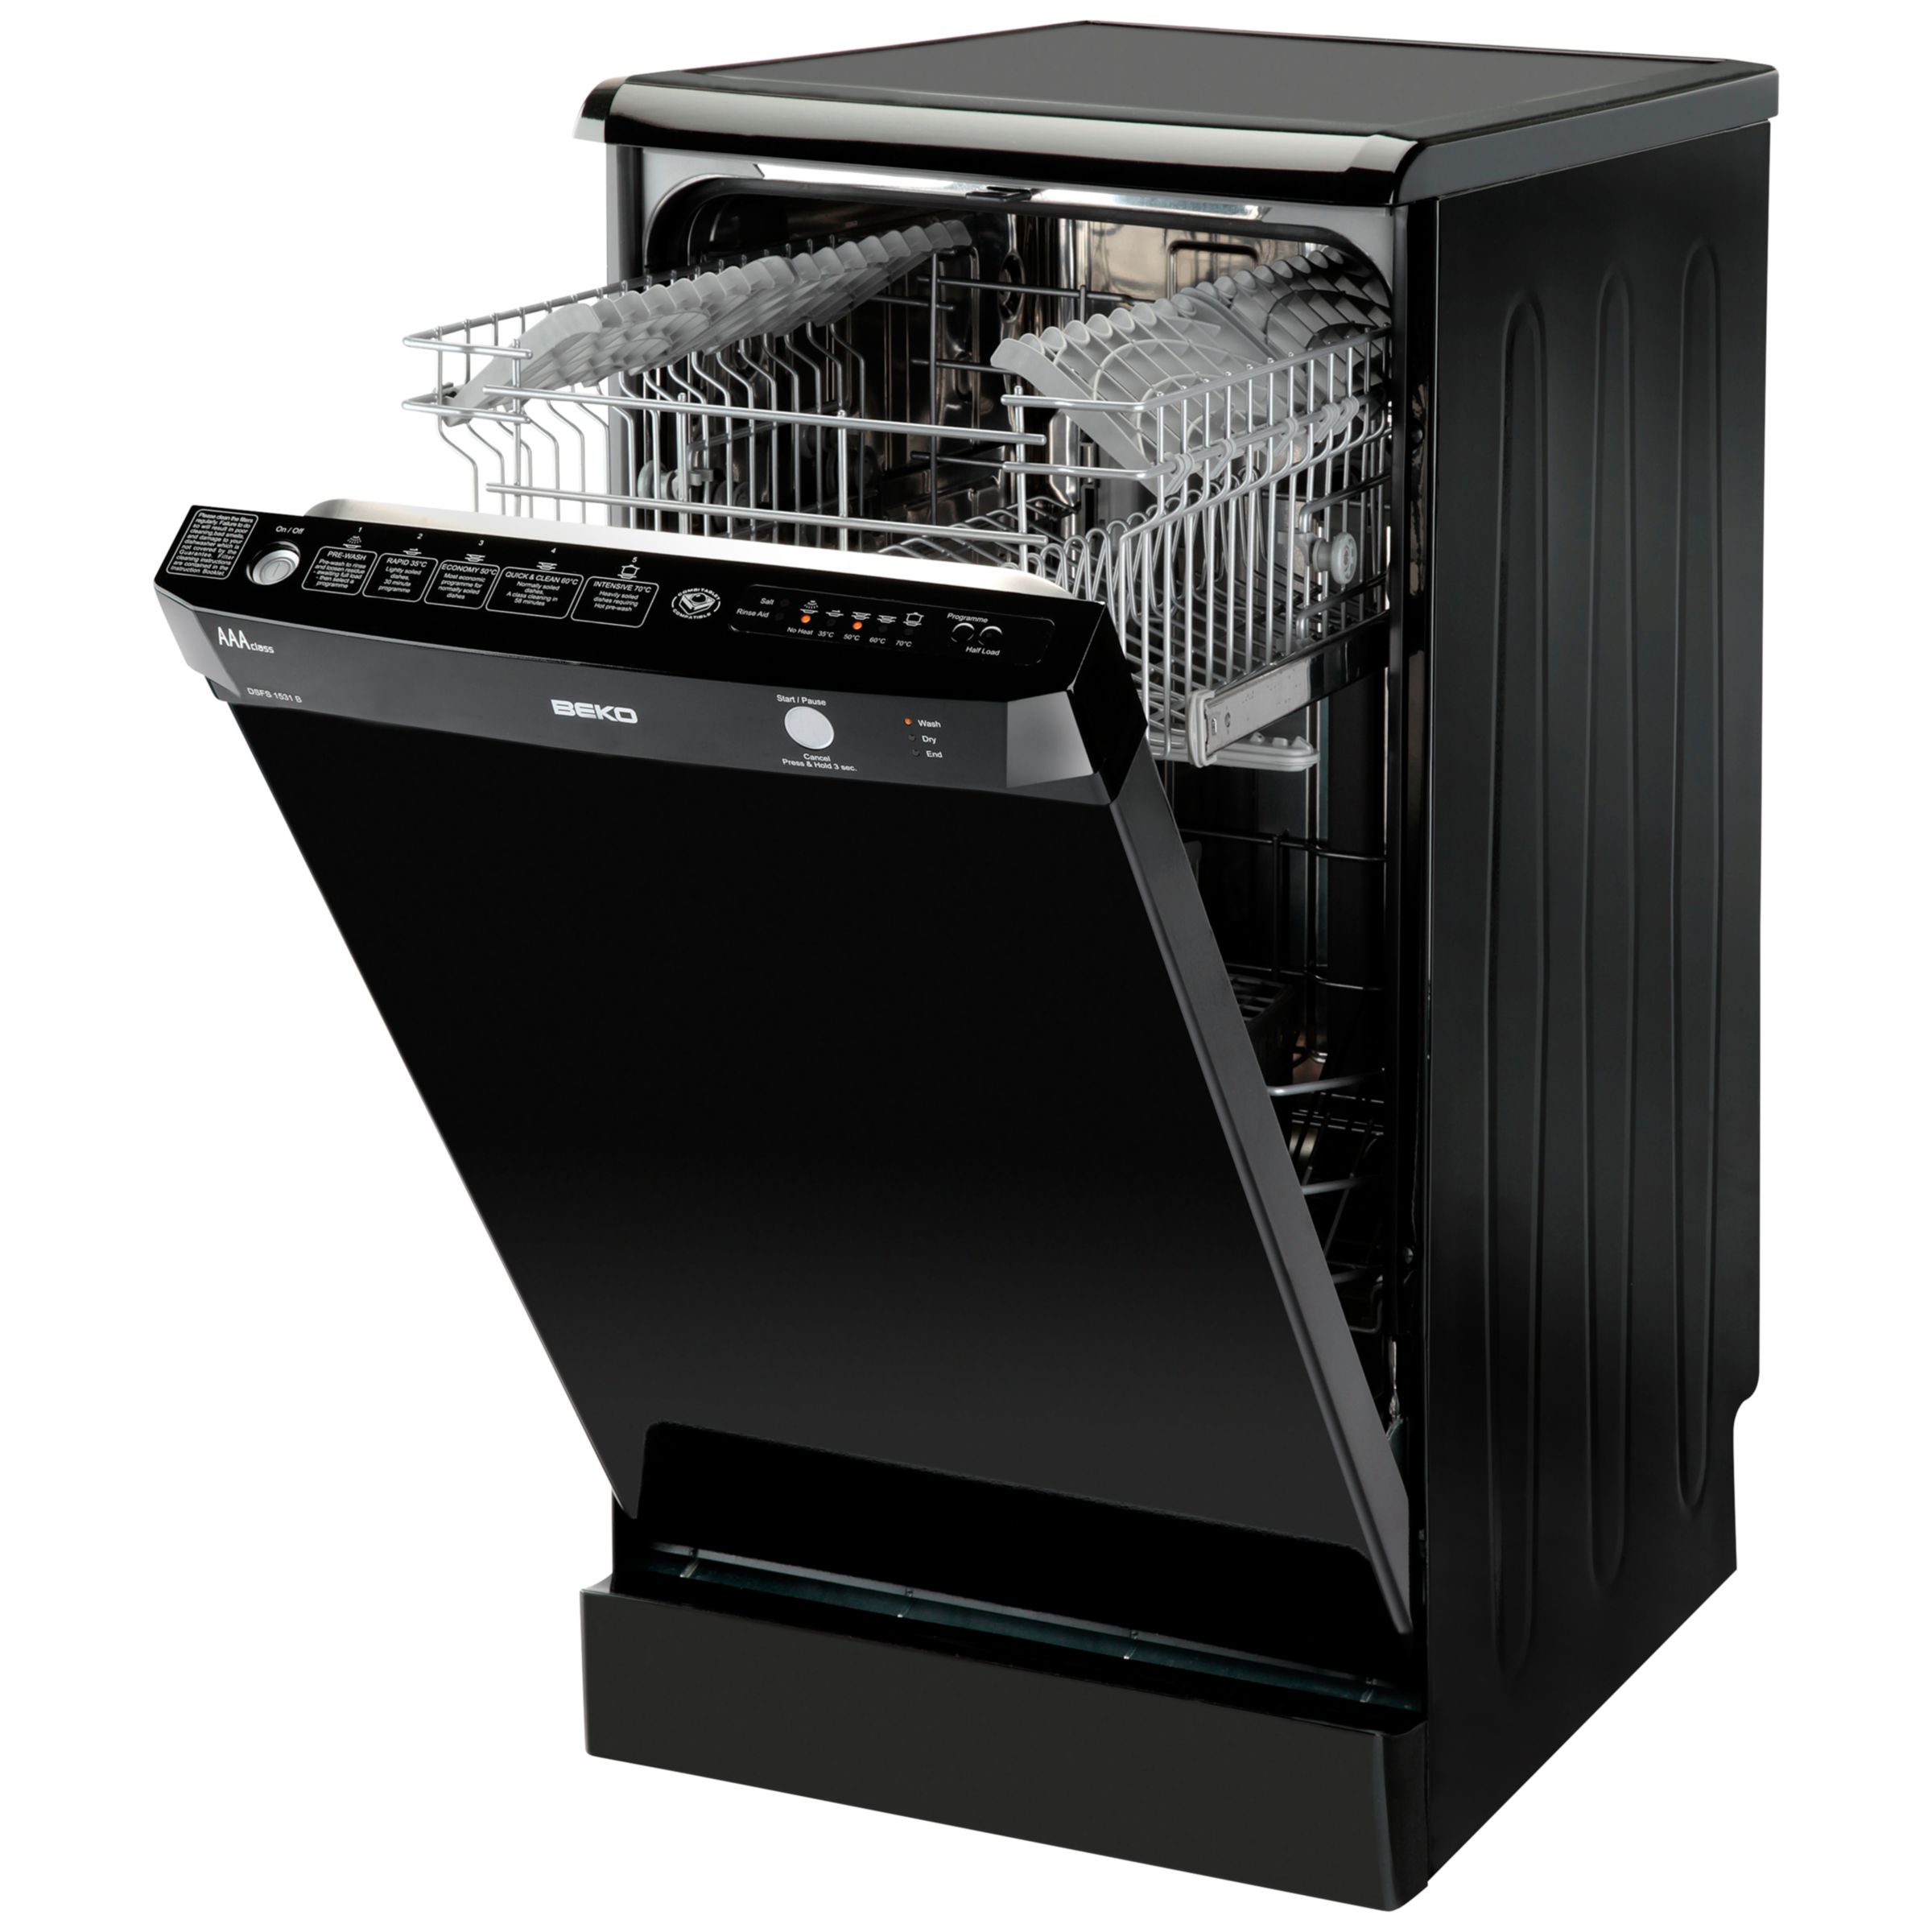 Beko DSFS1531B Slimline Freestanding Dishwasher, Black at John Lewis